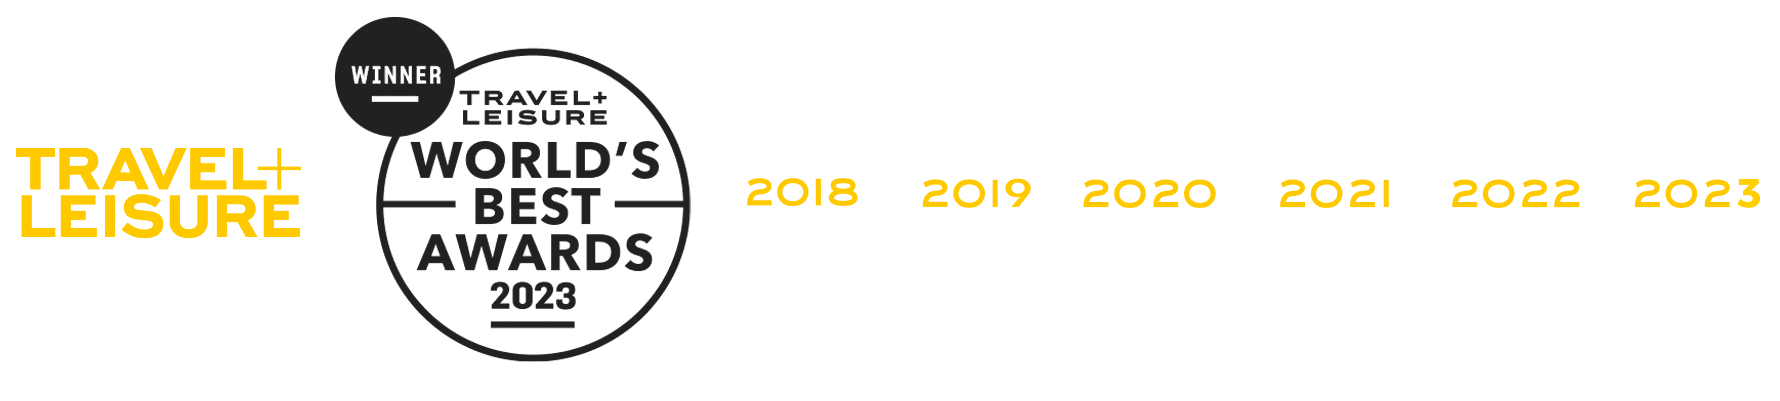 Travel+Leisure World's Best Awards badge showing 2018, 2019, 2020, 2021, 2022 & 2023